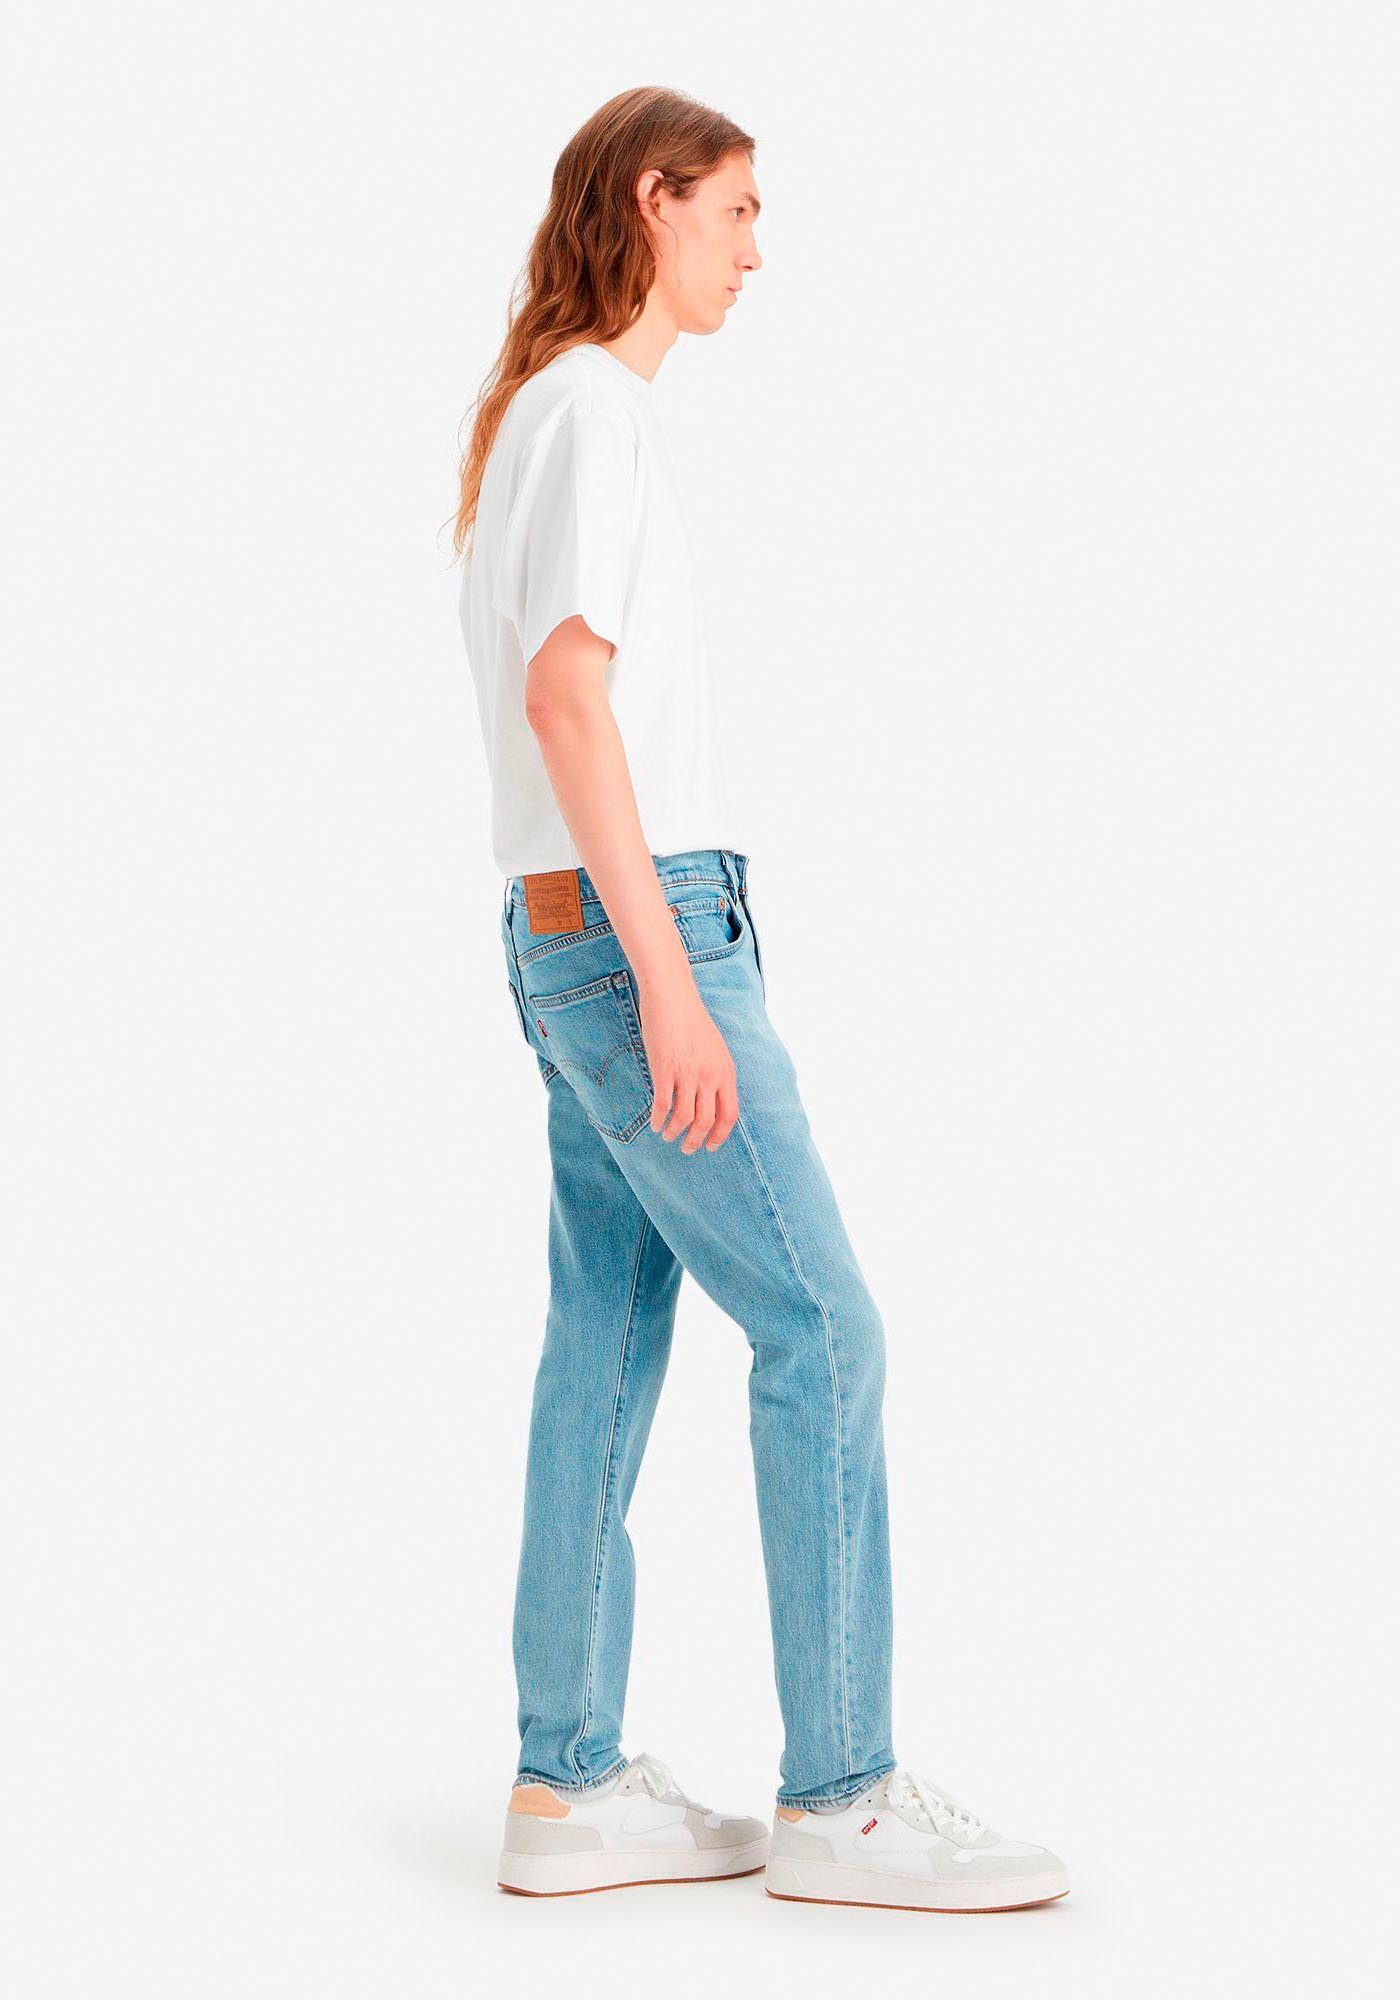 Levi's Tapered jeans 512 Slim Taper Fit